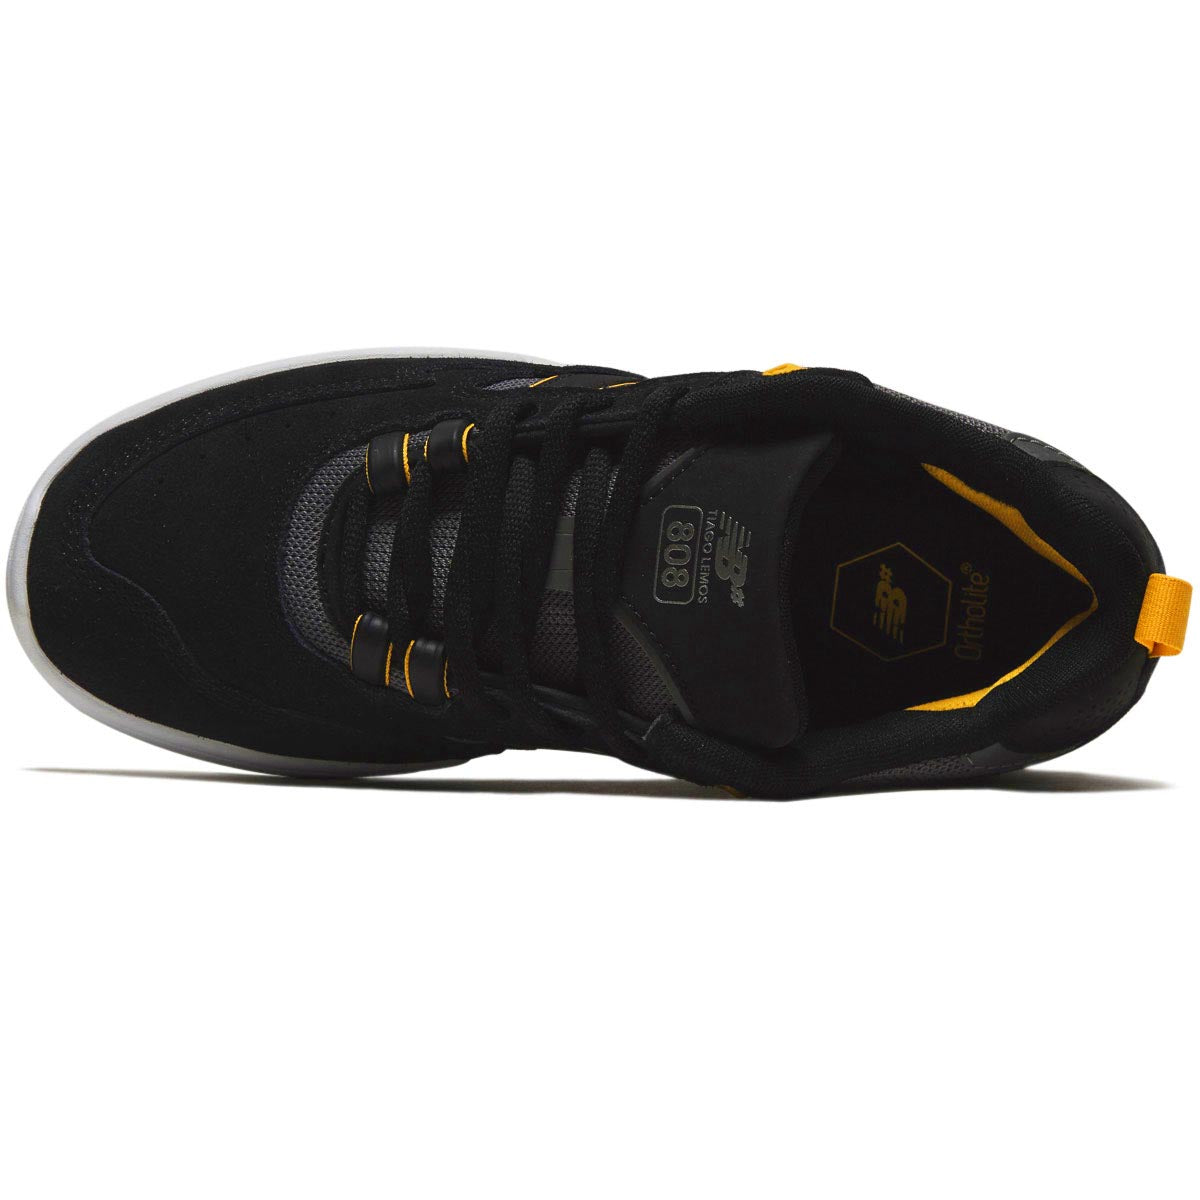 New Balance 808 Tiago Shoes - Black/Yellow image 3